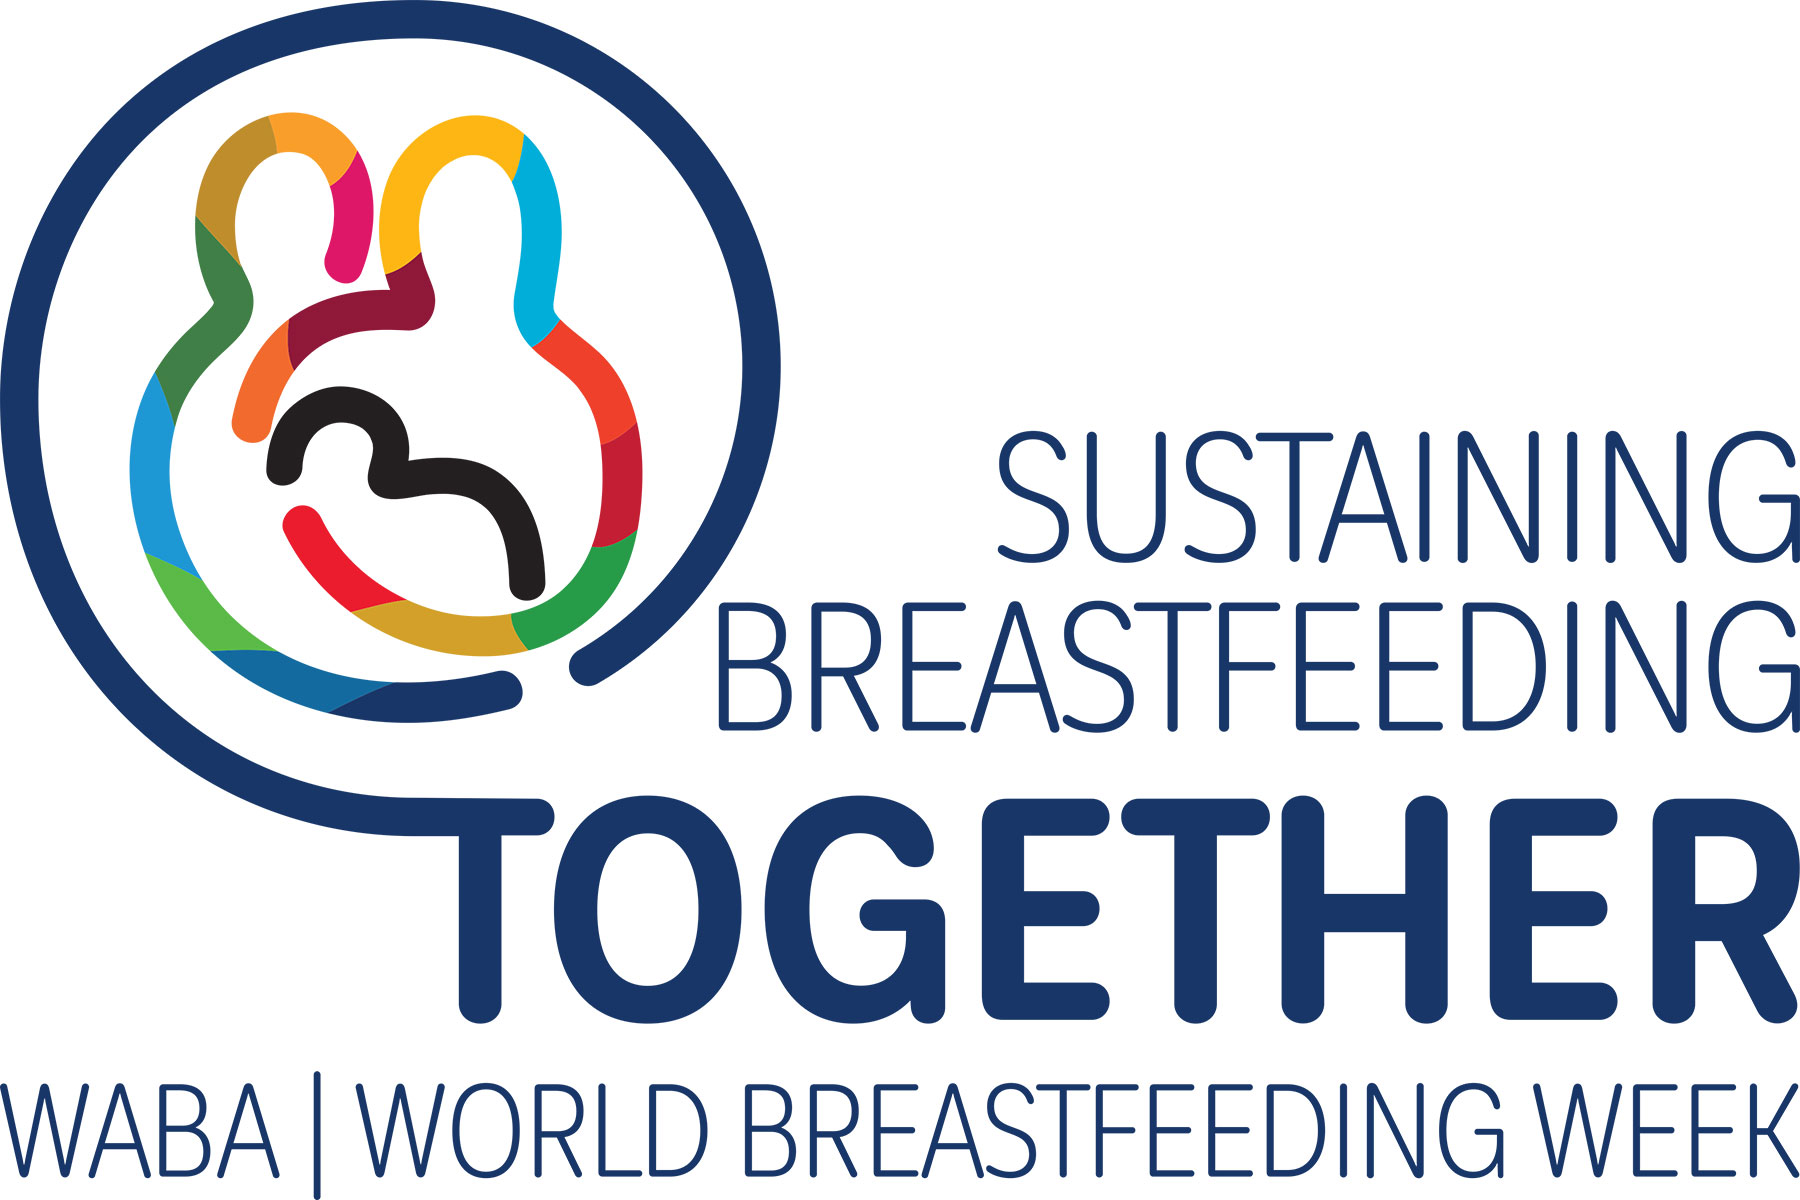 Countdown to World Breastfeeding Week 2017